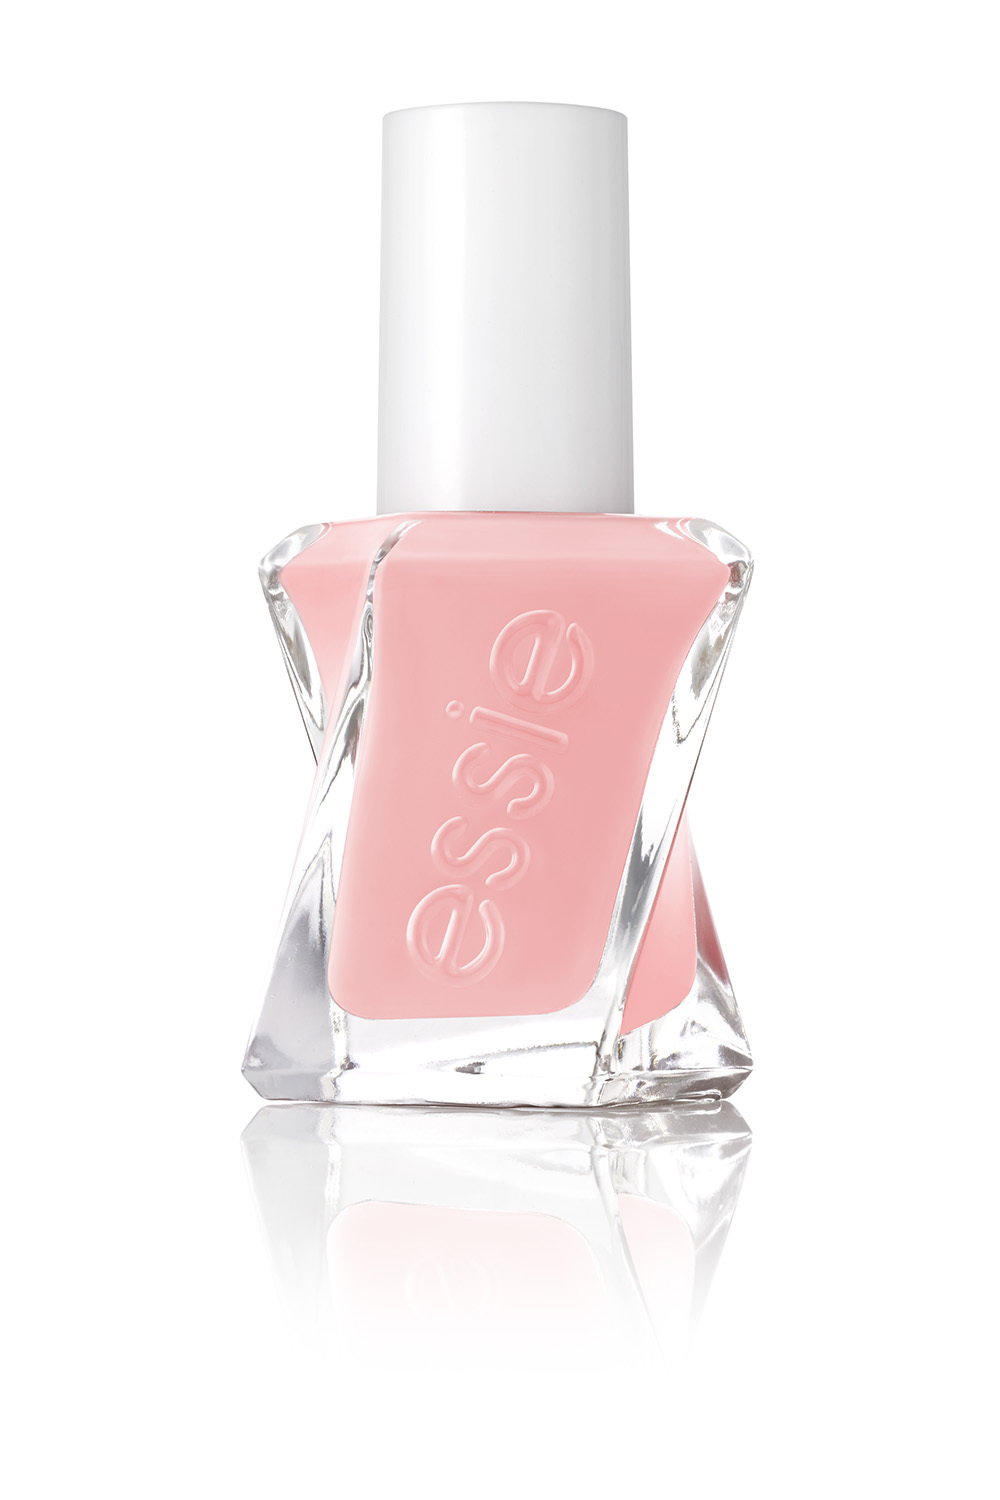 Essie first look gel couture - 140 couture curator - oranje - langhoudende nagellak - 13,5 ml